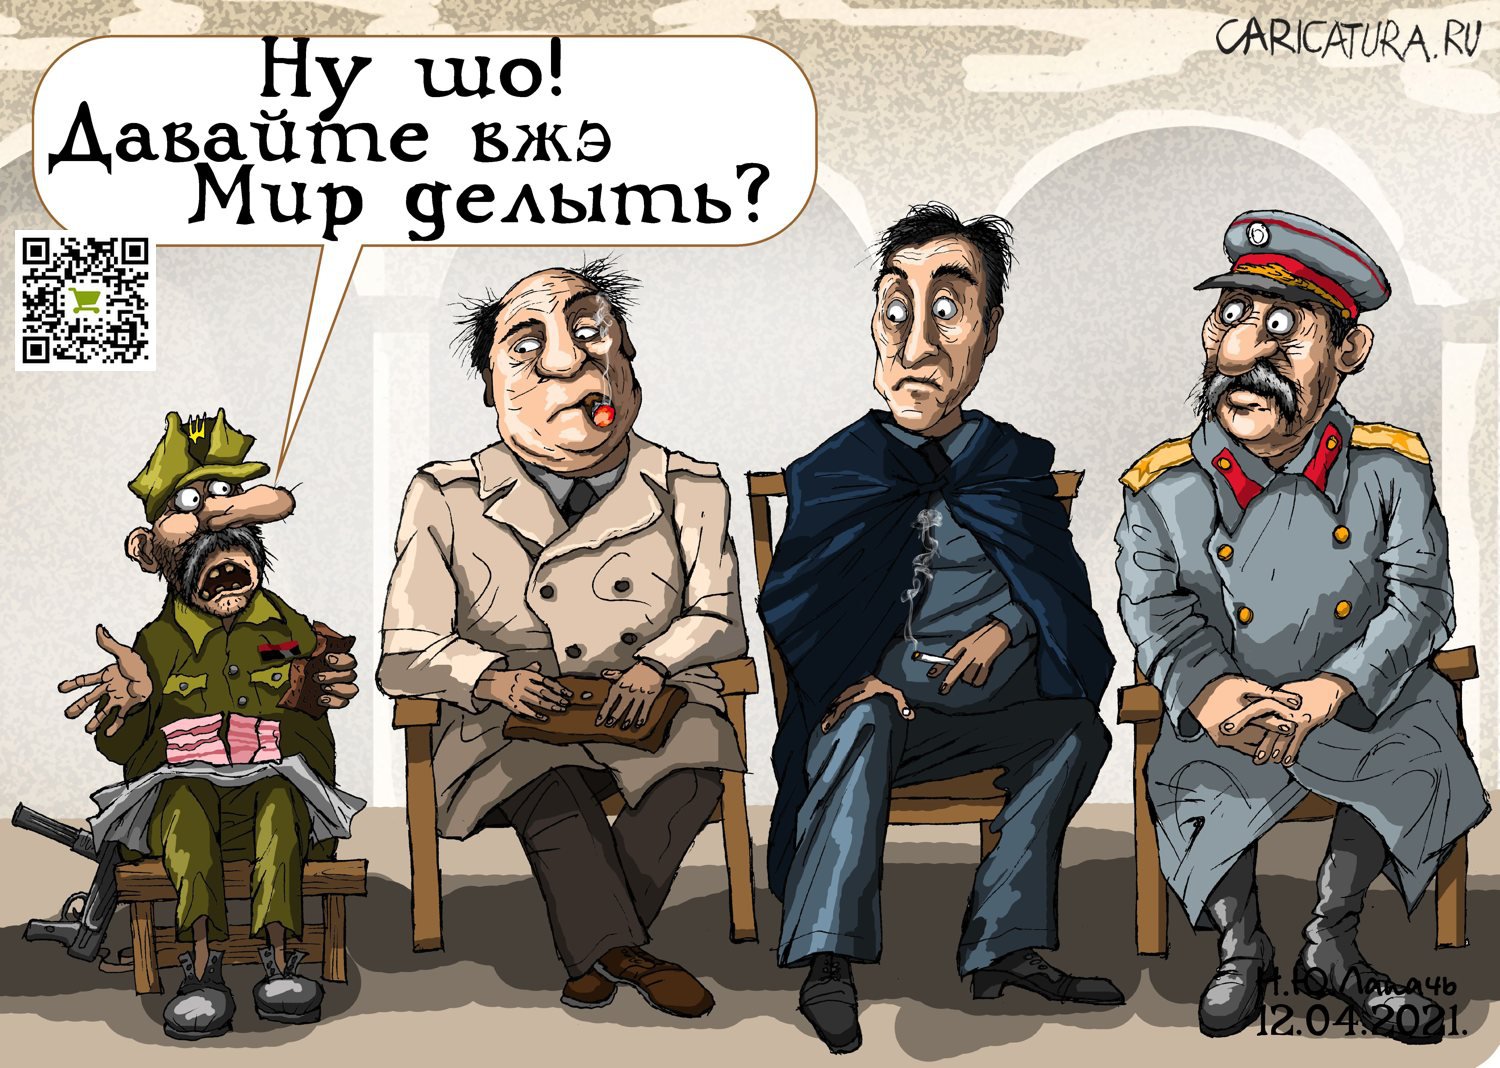 Карикатура "Архив НКВД, редкий снимок", Теплый Телогрей